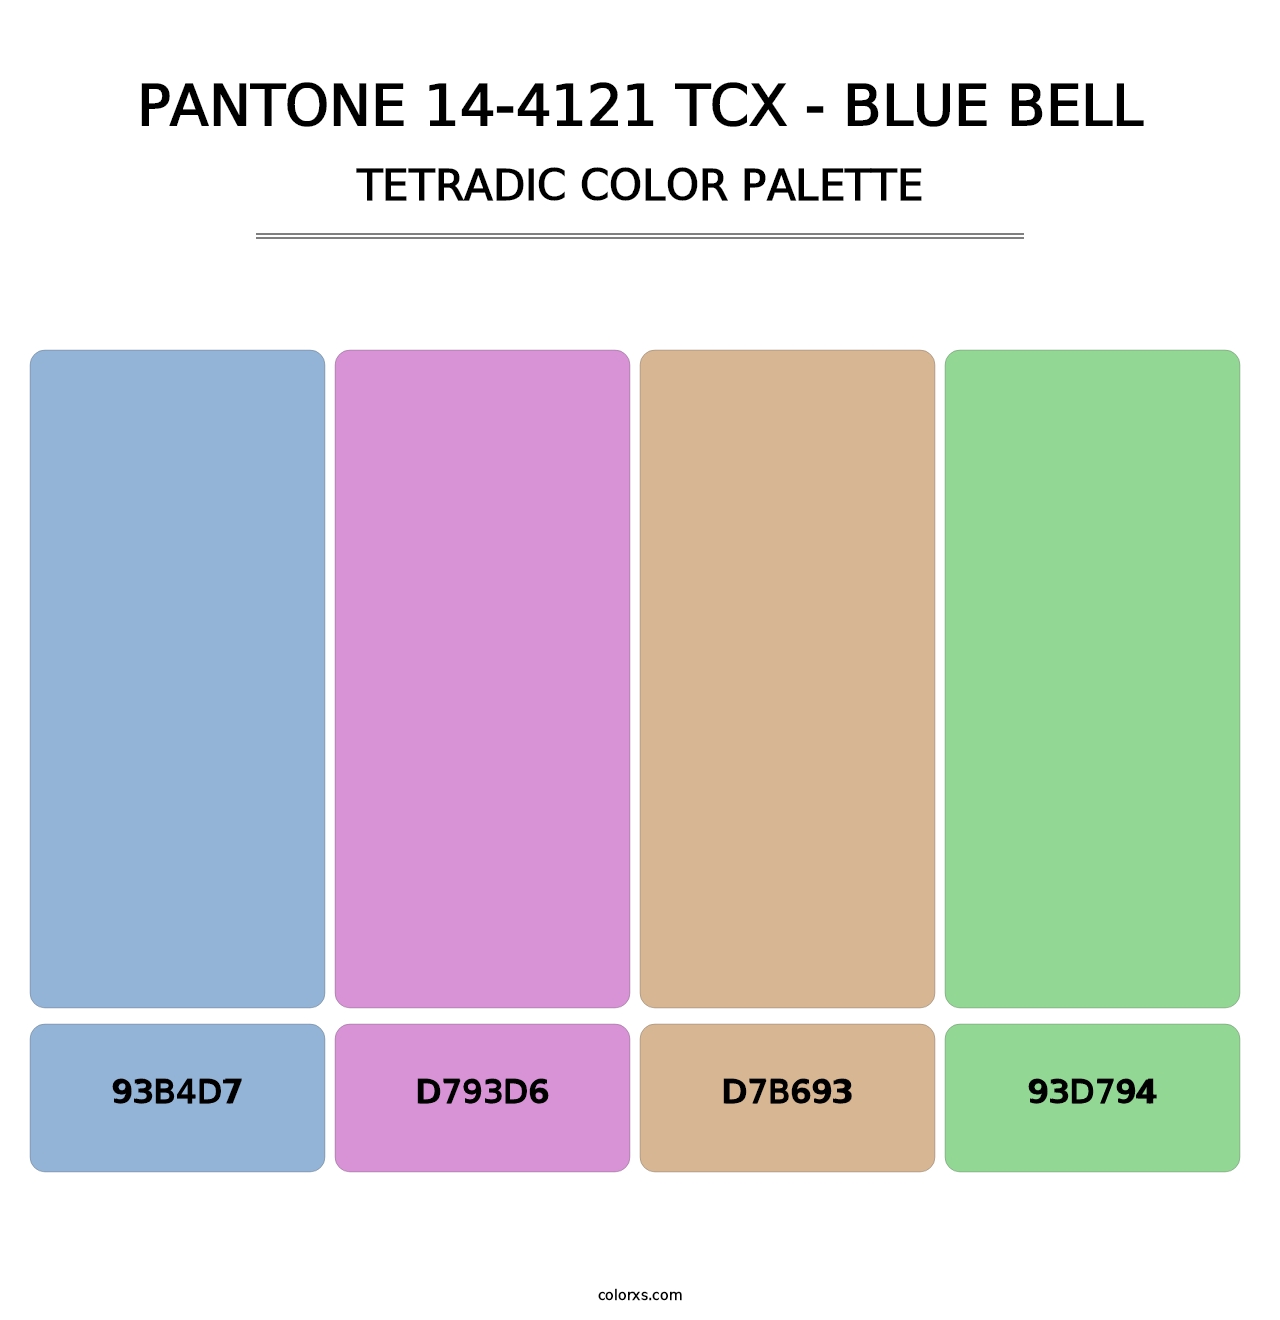 PANTONE 14-4121 TCX - Blue Bell - Tetradic Color Palette